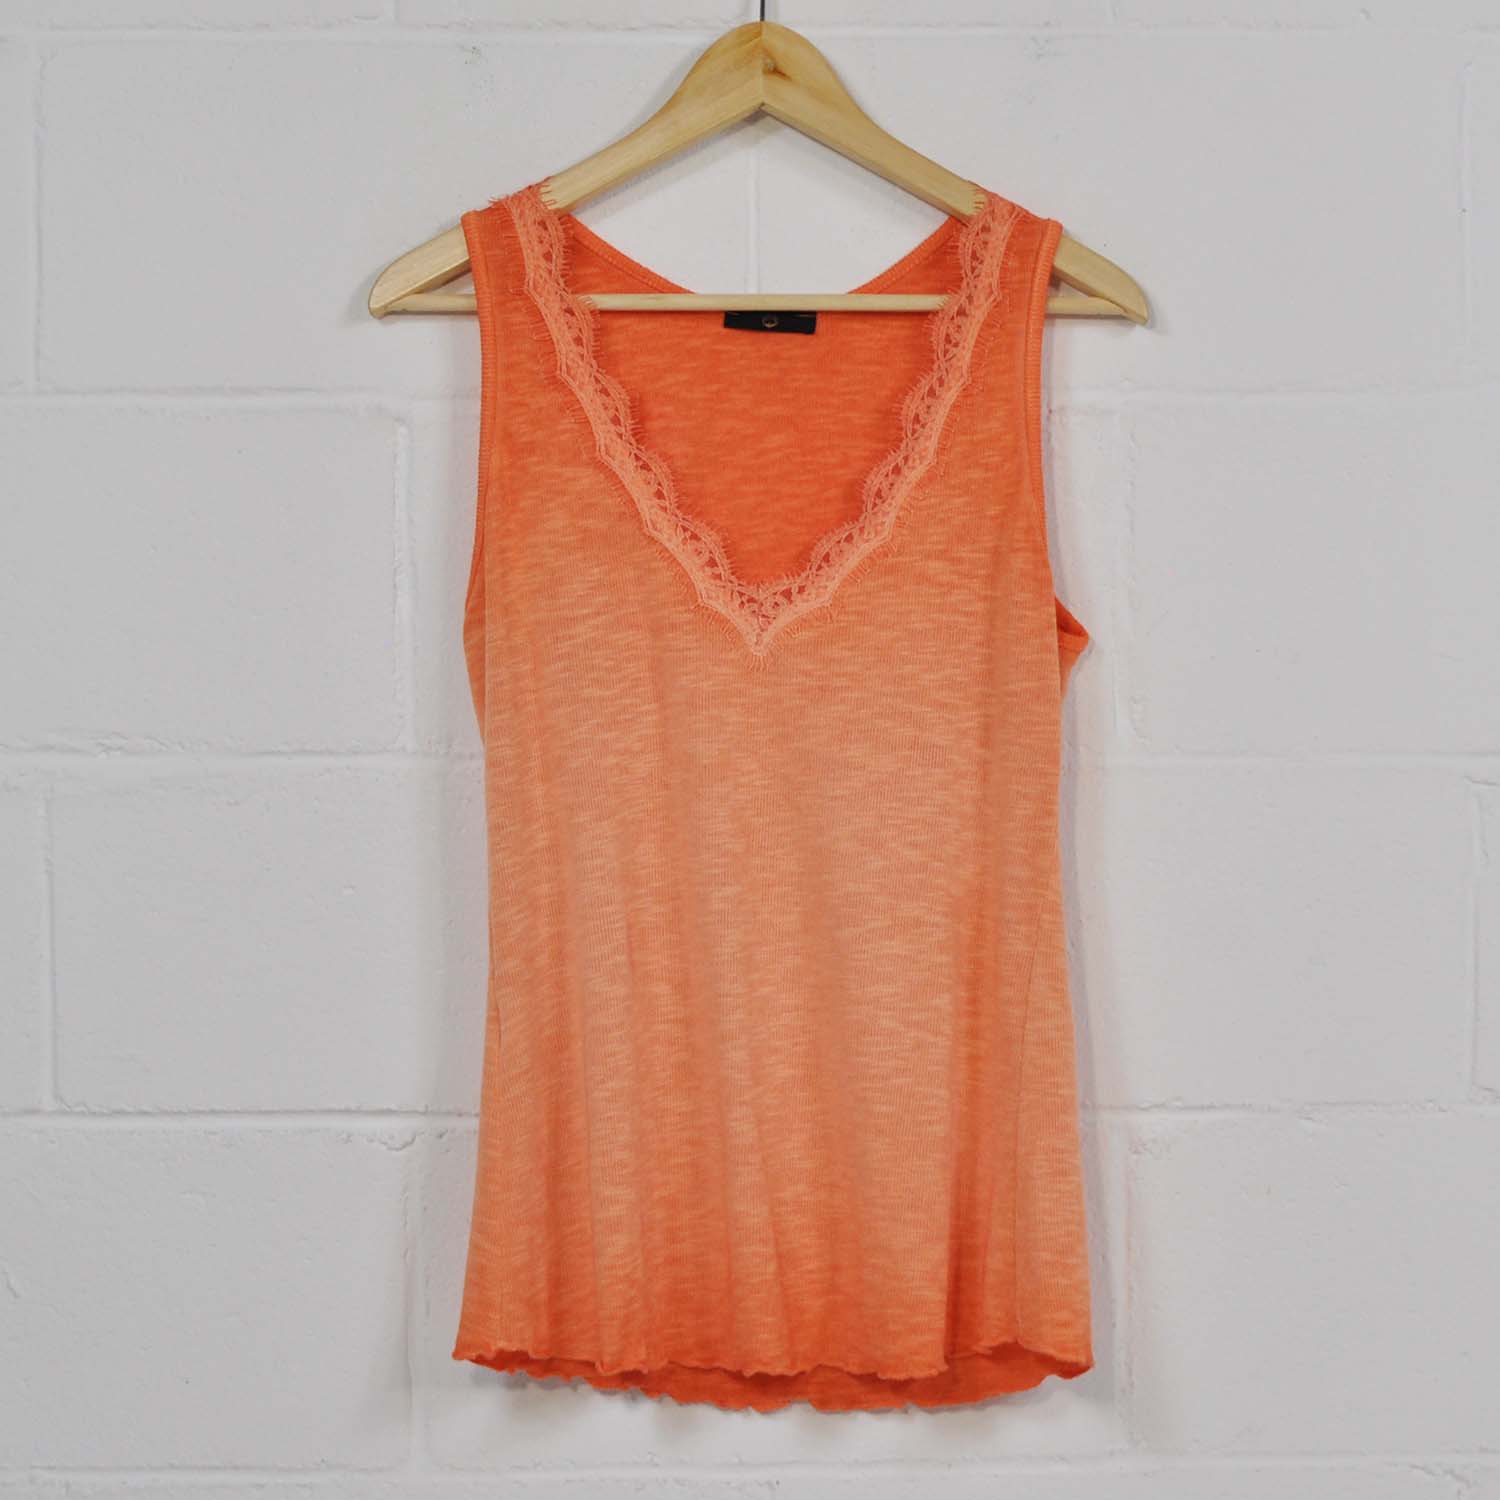 Camiseta tirantes lencera naranja